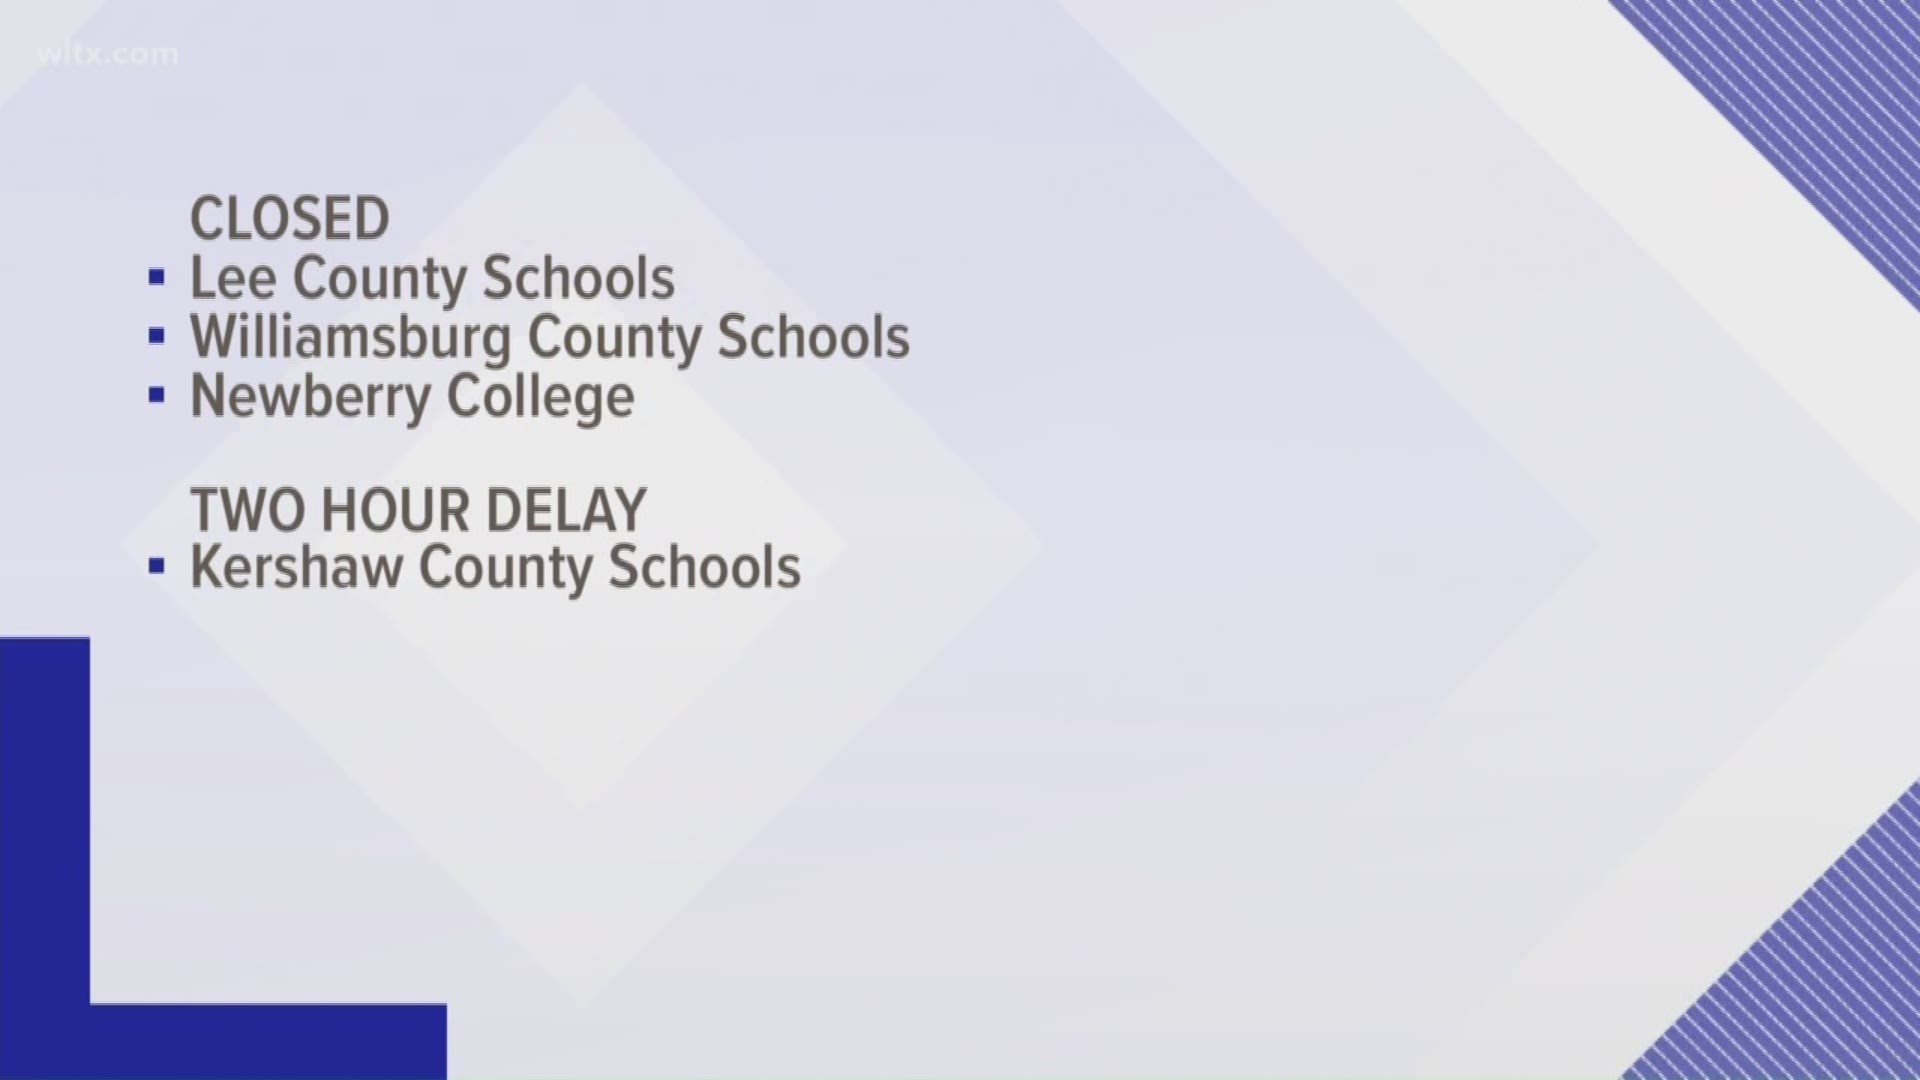 Most Midlands schools will resume regular schedules Monday.